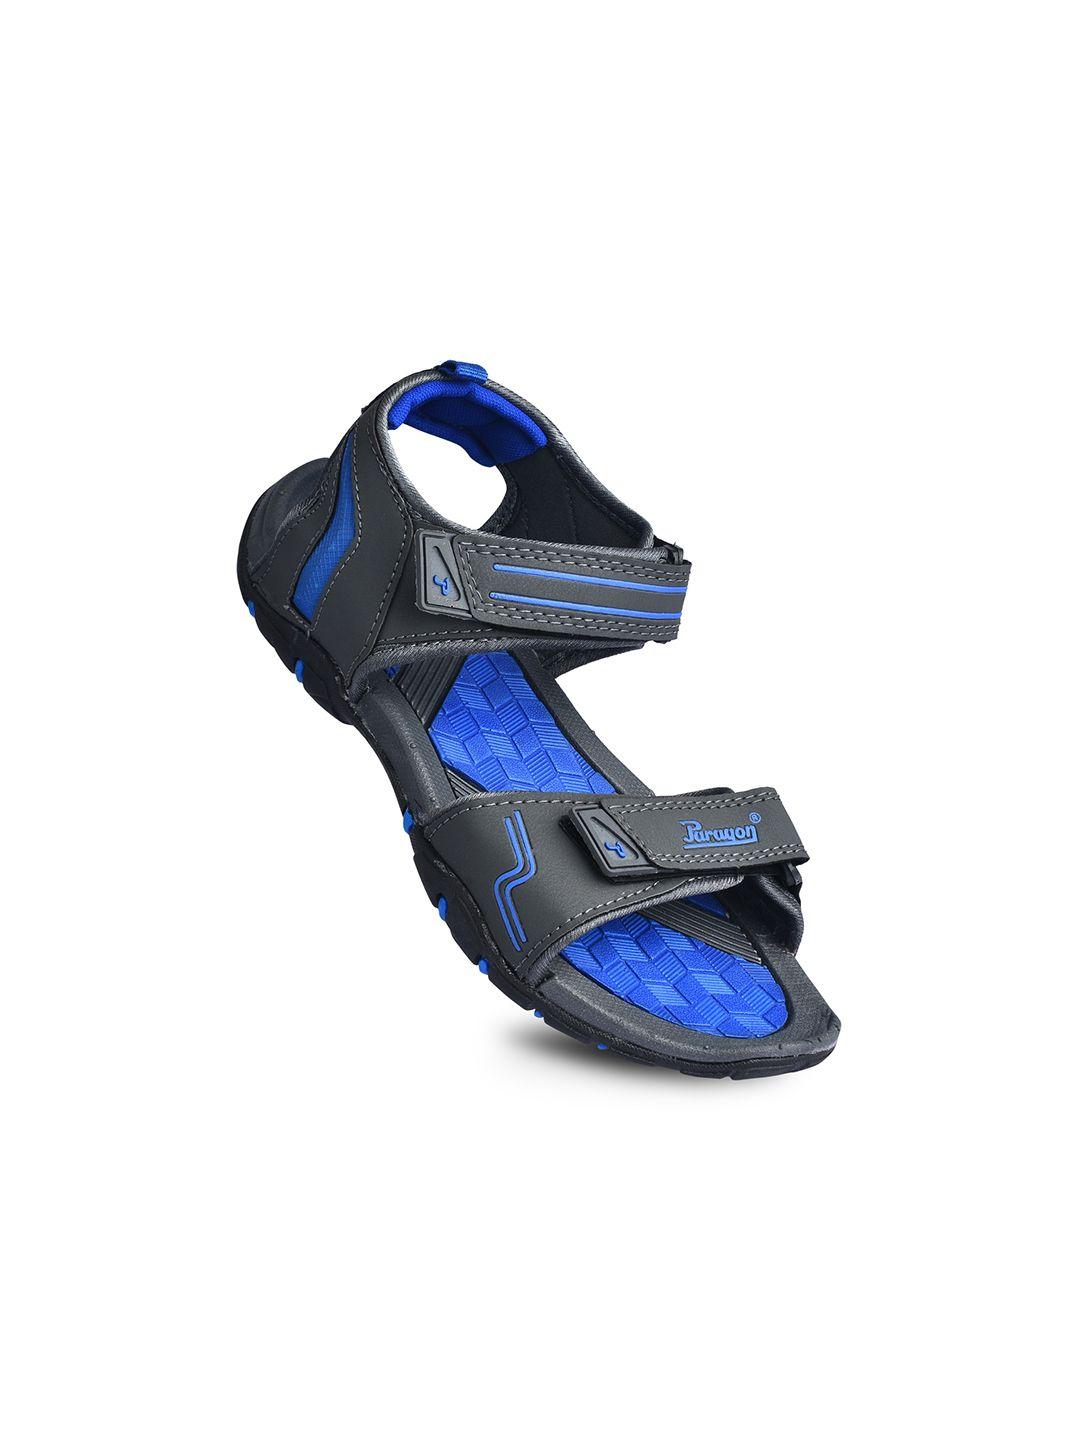 paragon men blue & grey sports sandals